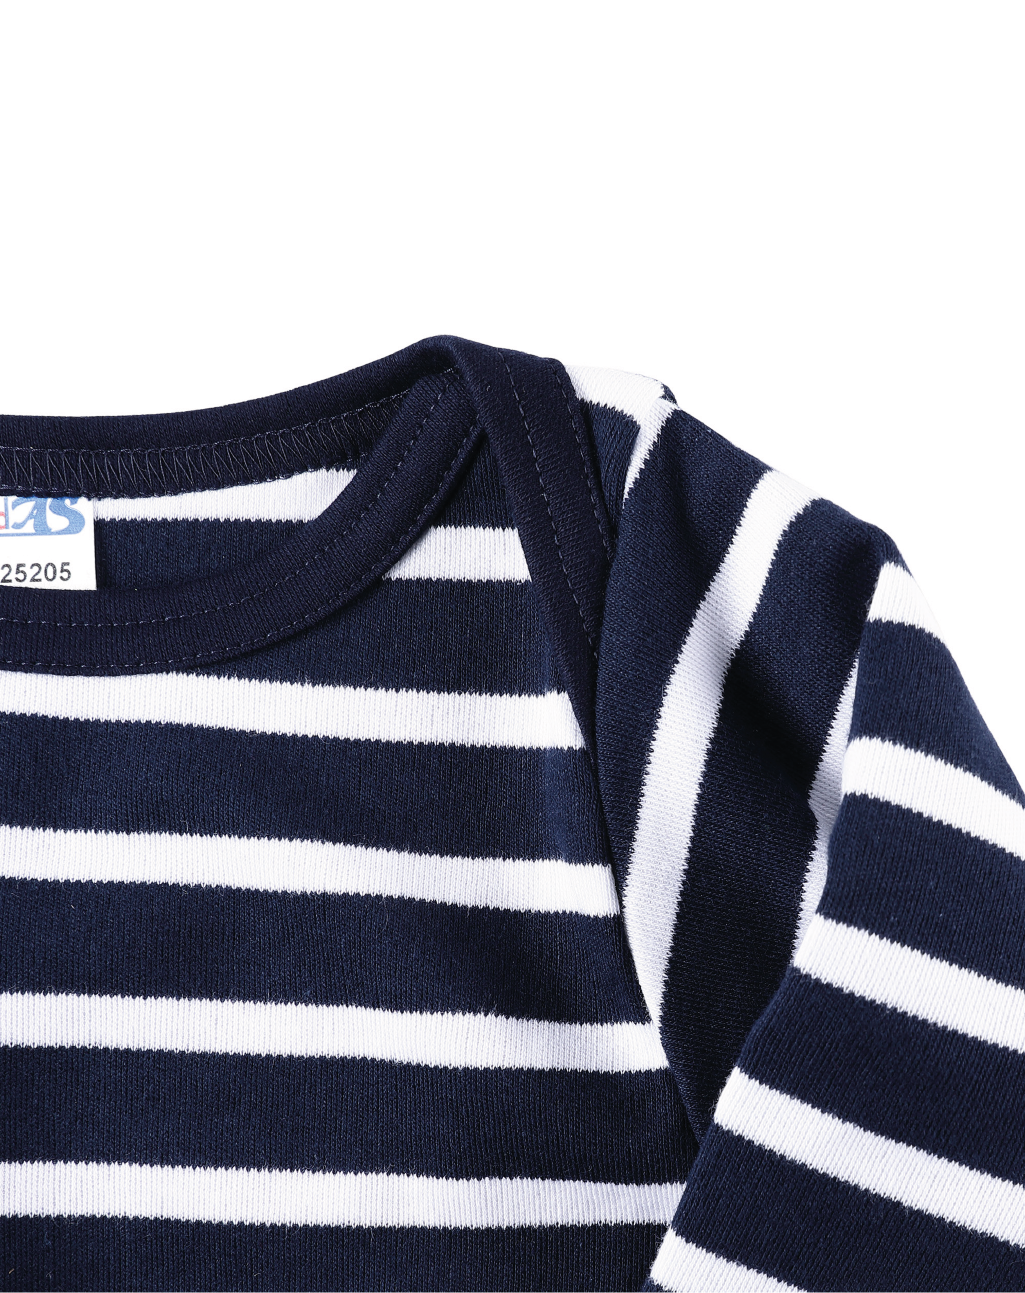 Bretons streepshirt | Baby